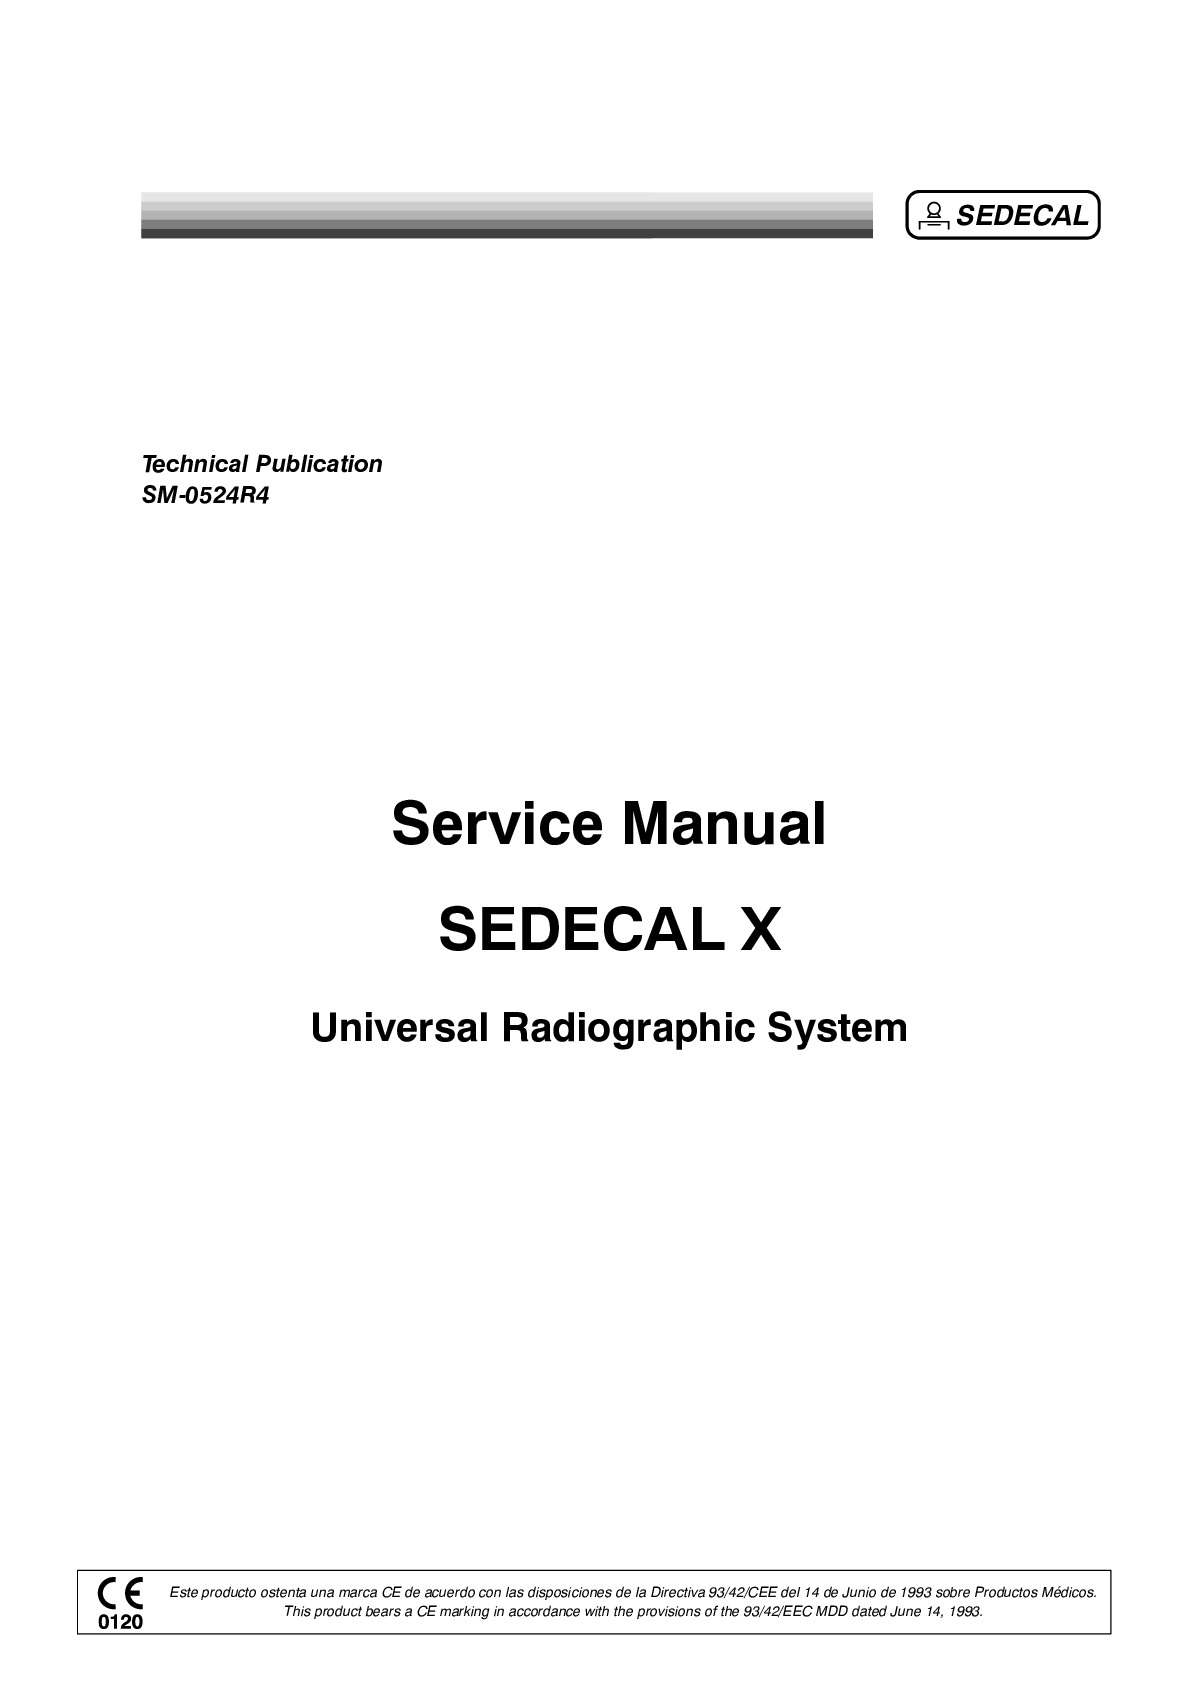 Sedecal X SM SM0524R4i- URS MAN-MOT SED (110518)